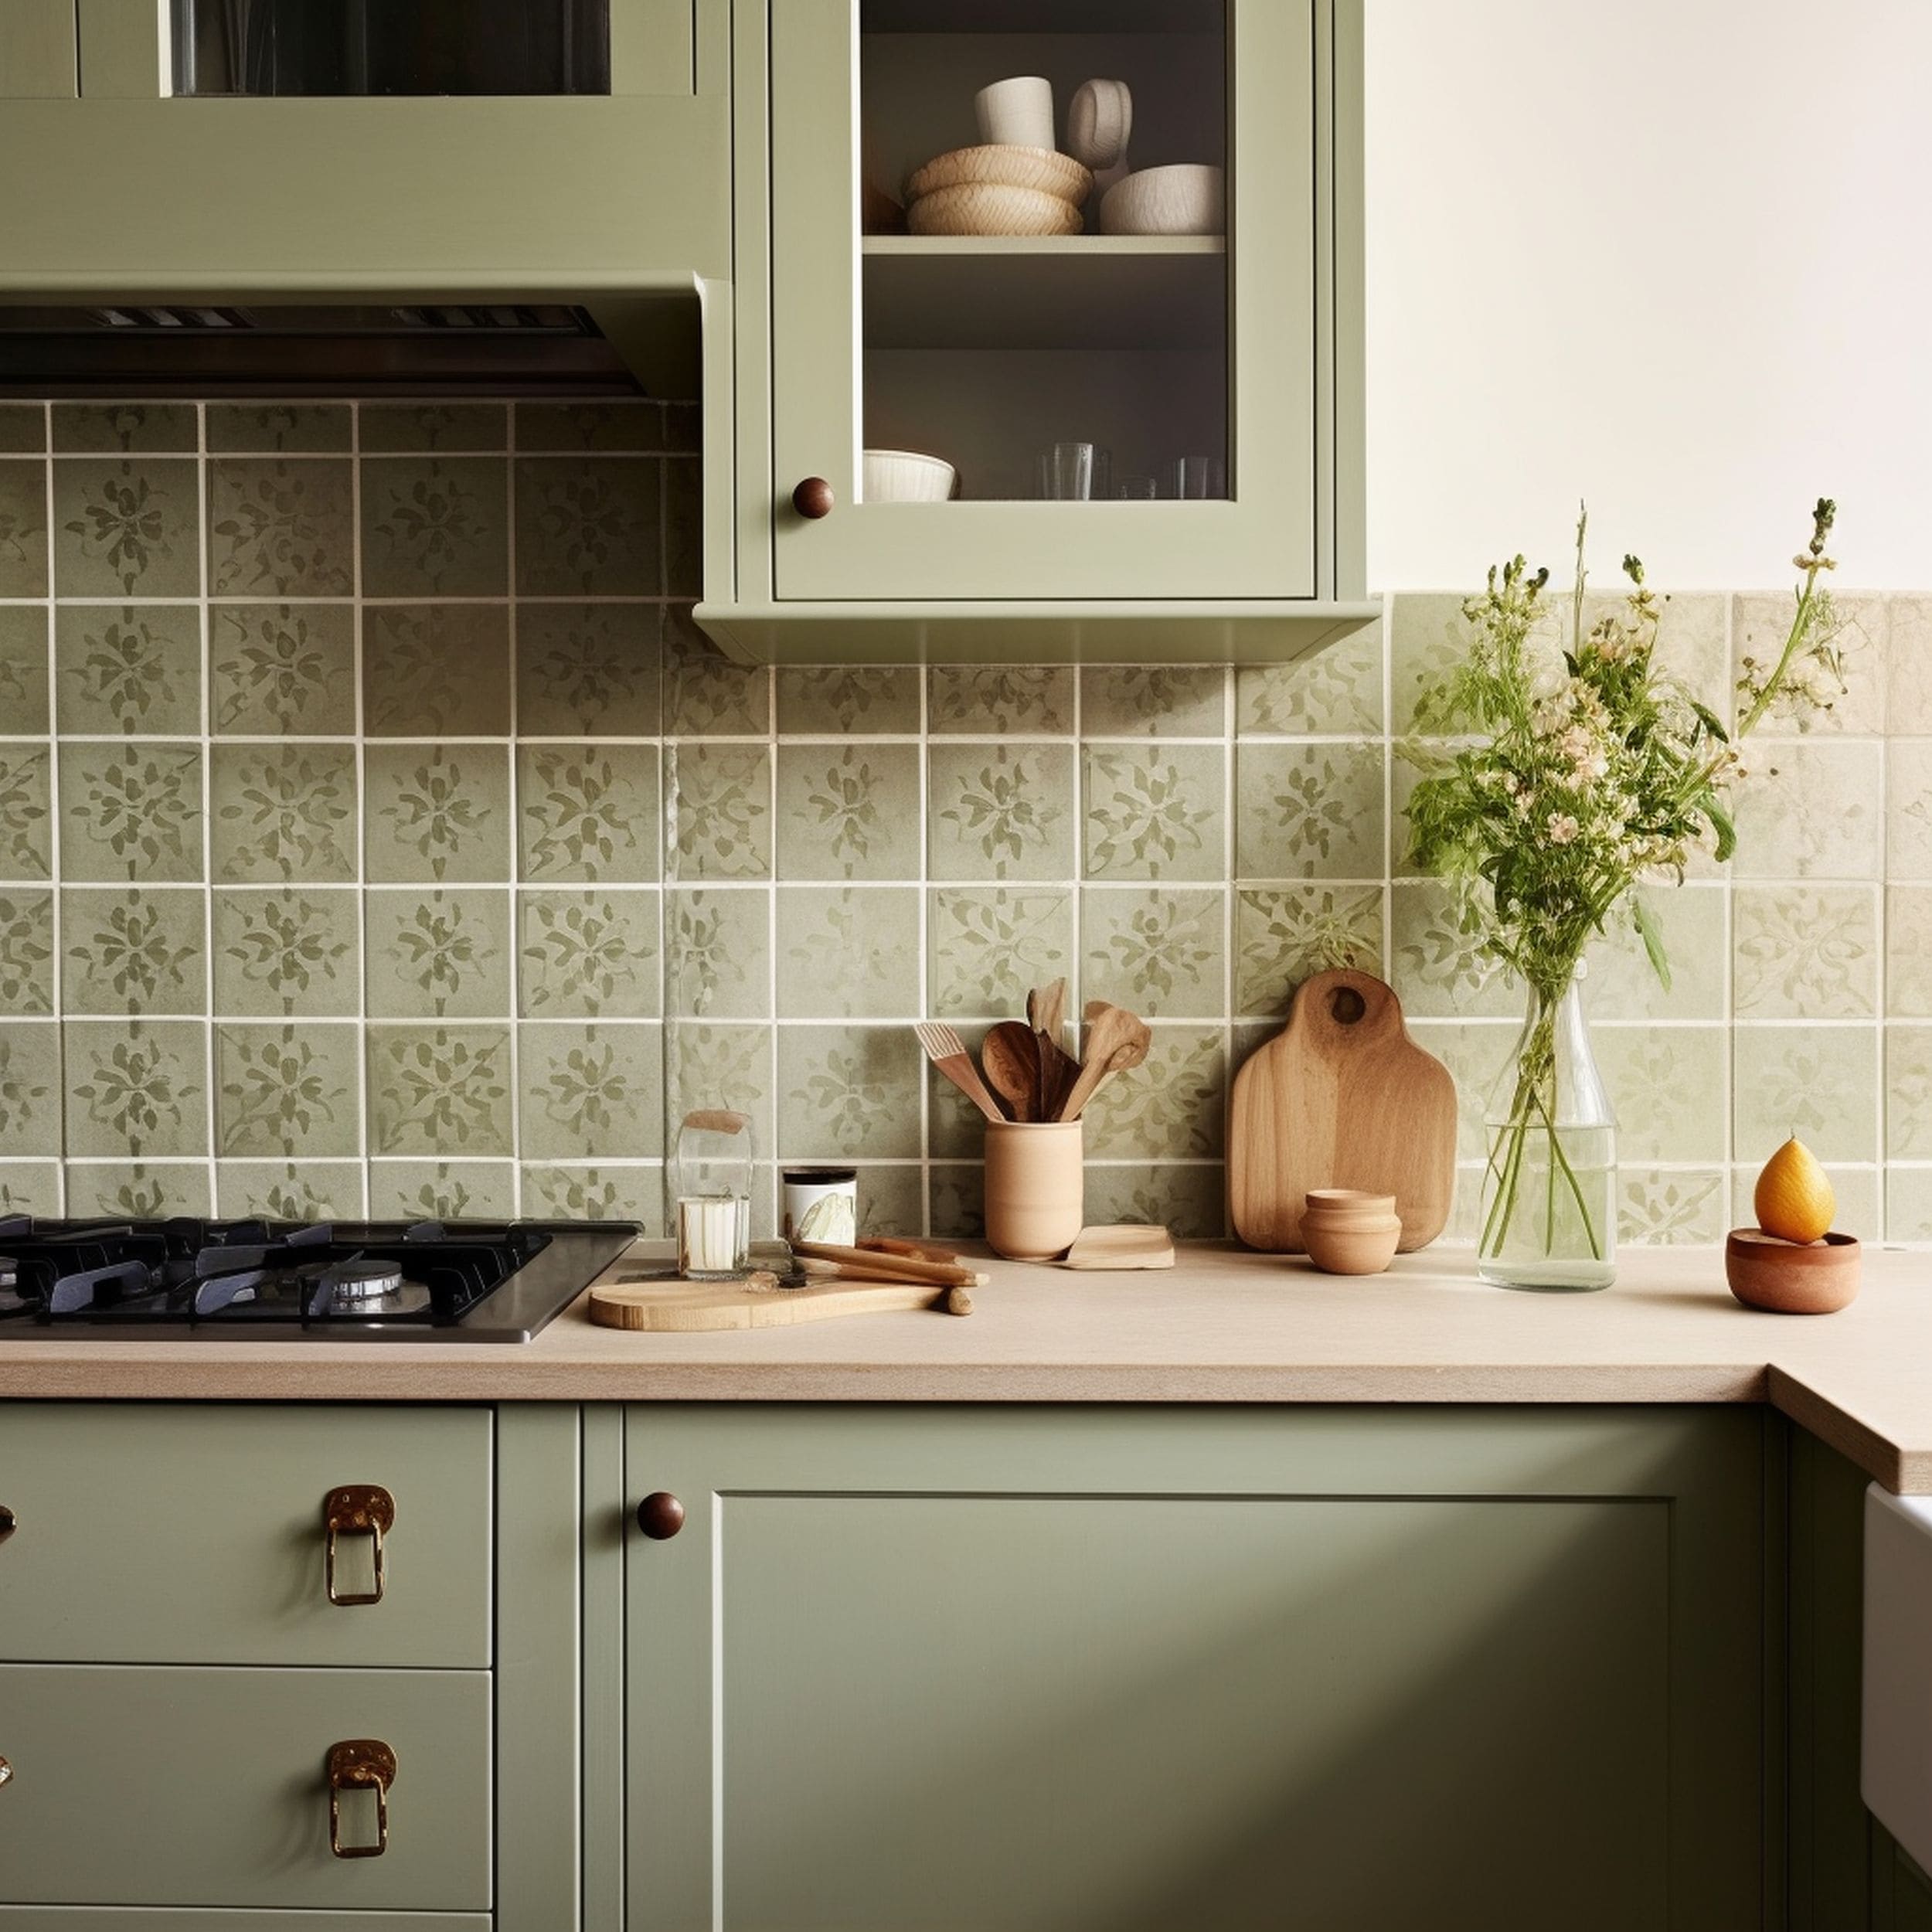 Kitchen With Sage Green cabinets and Matching Backsplash